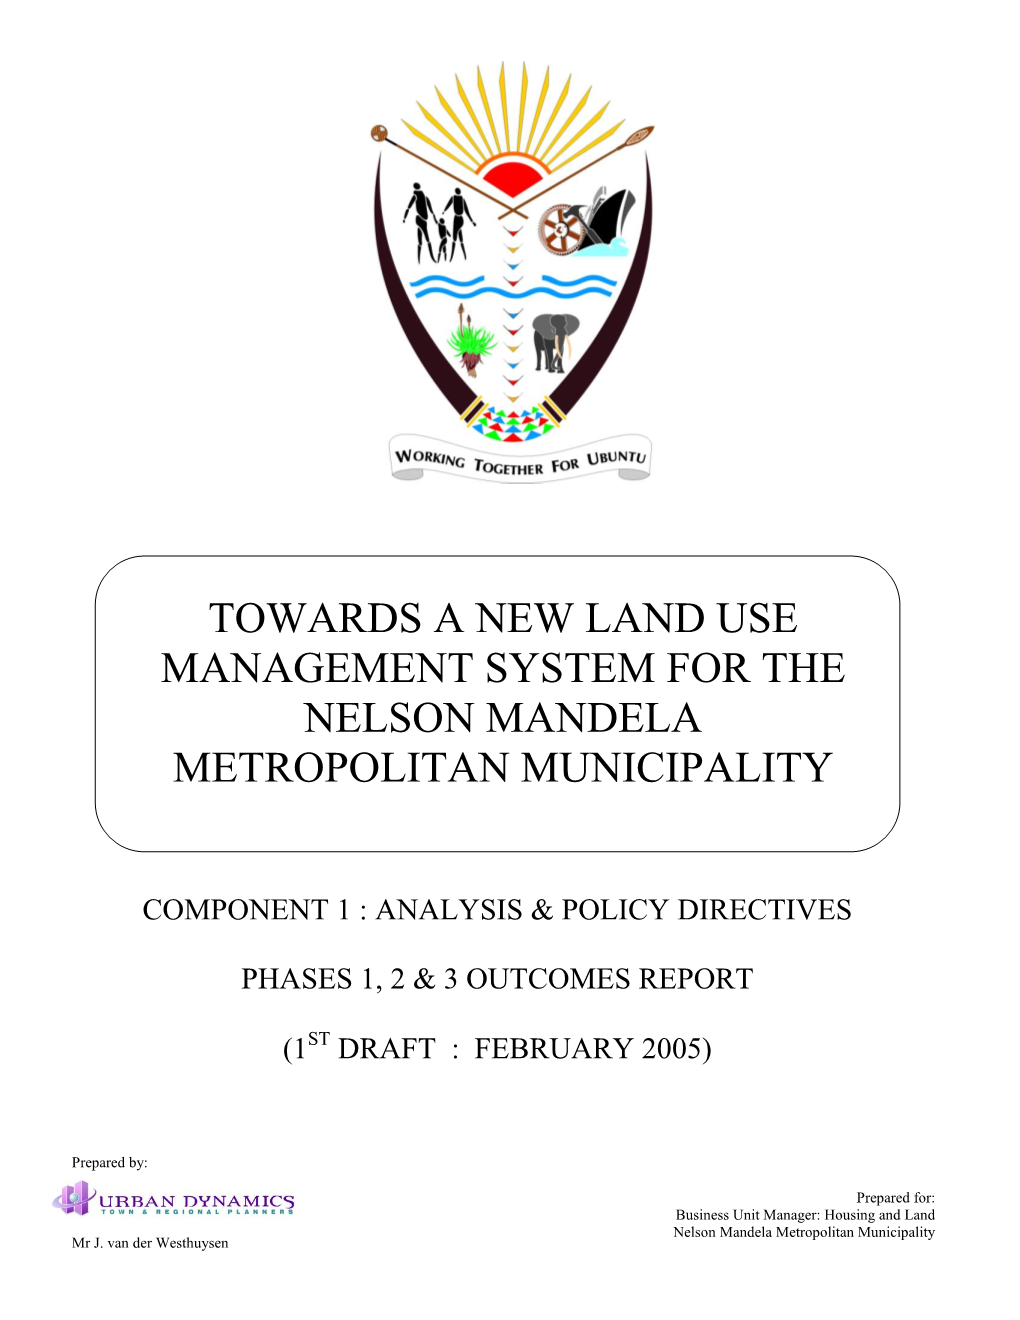 Land Use Management System for the Nelson Mandela Metropolitan Municipality